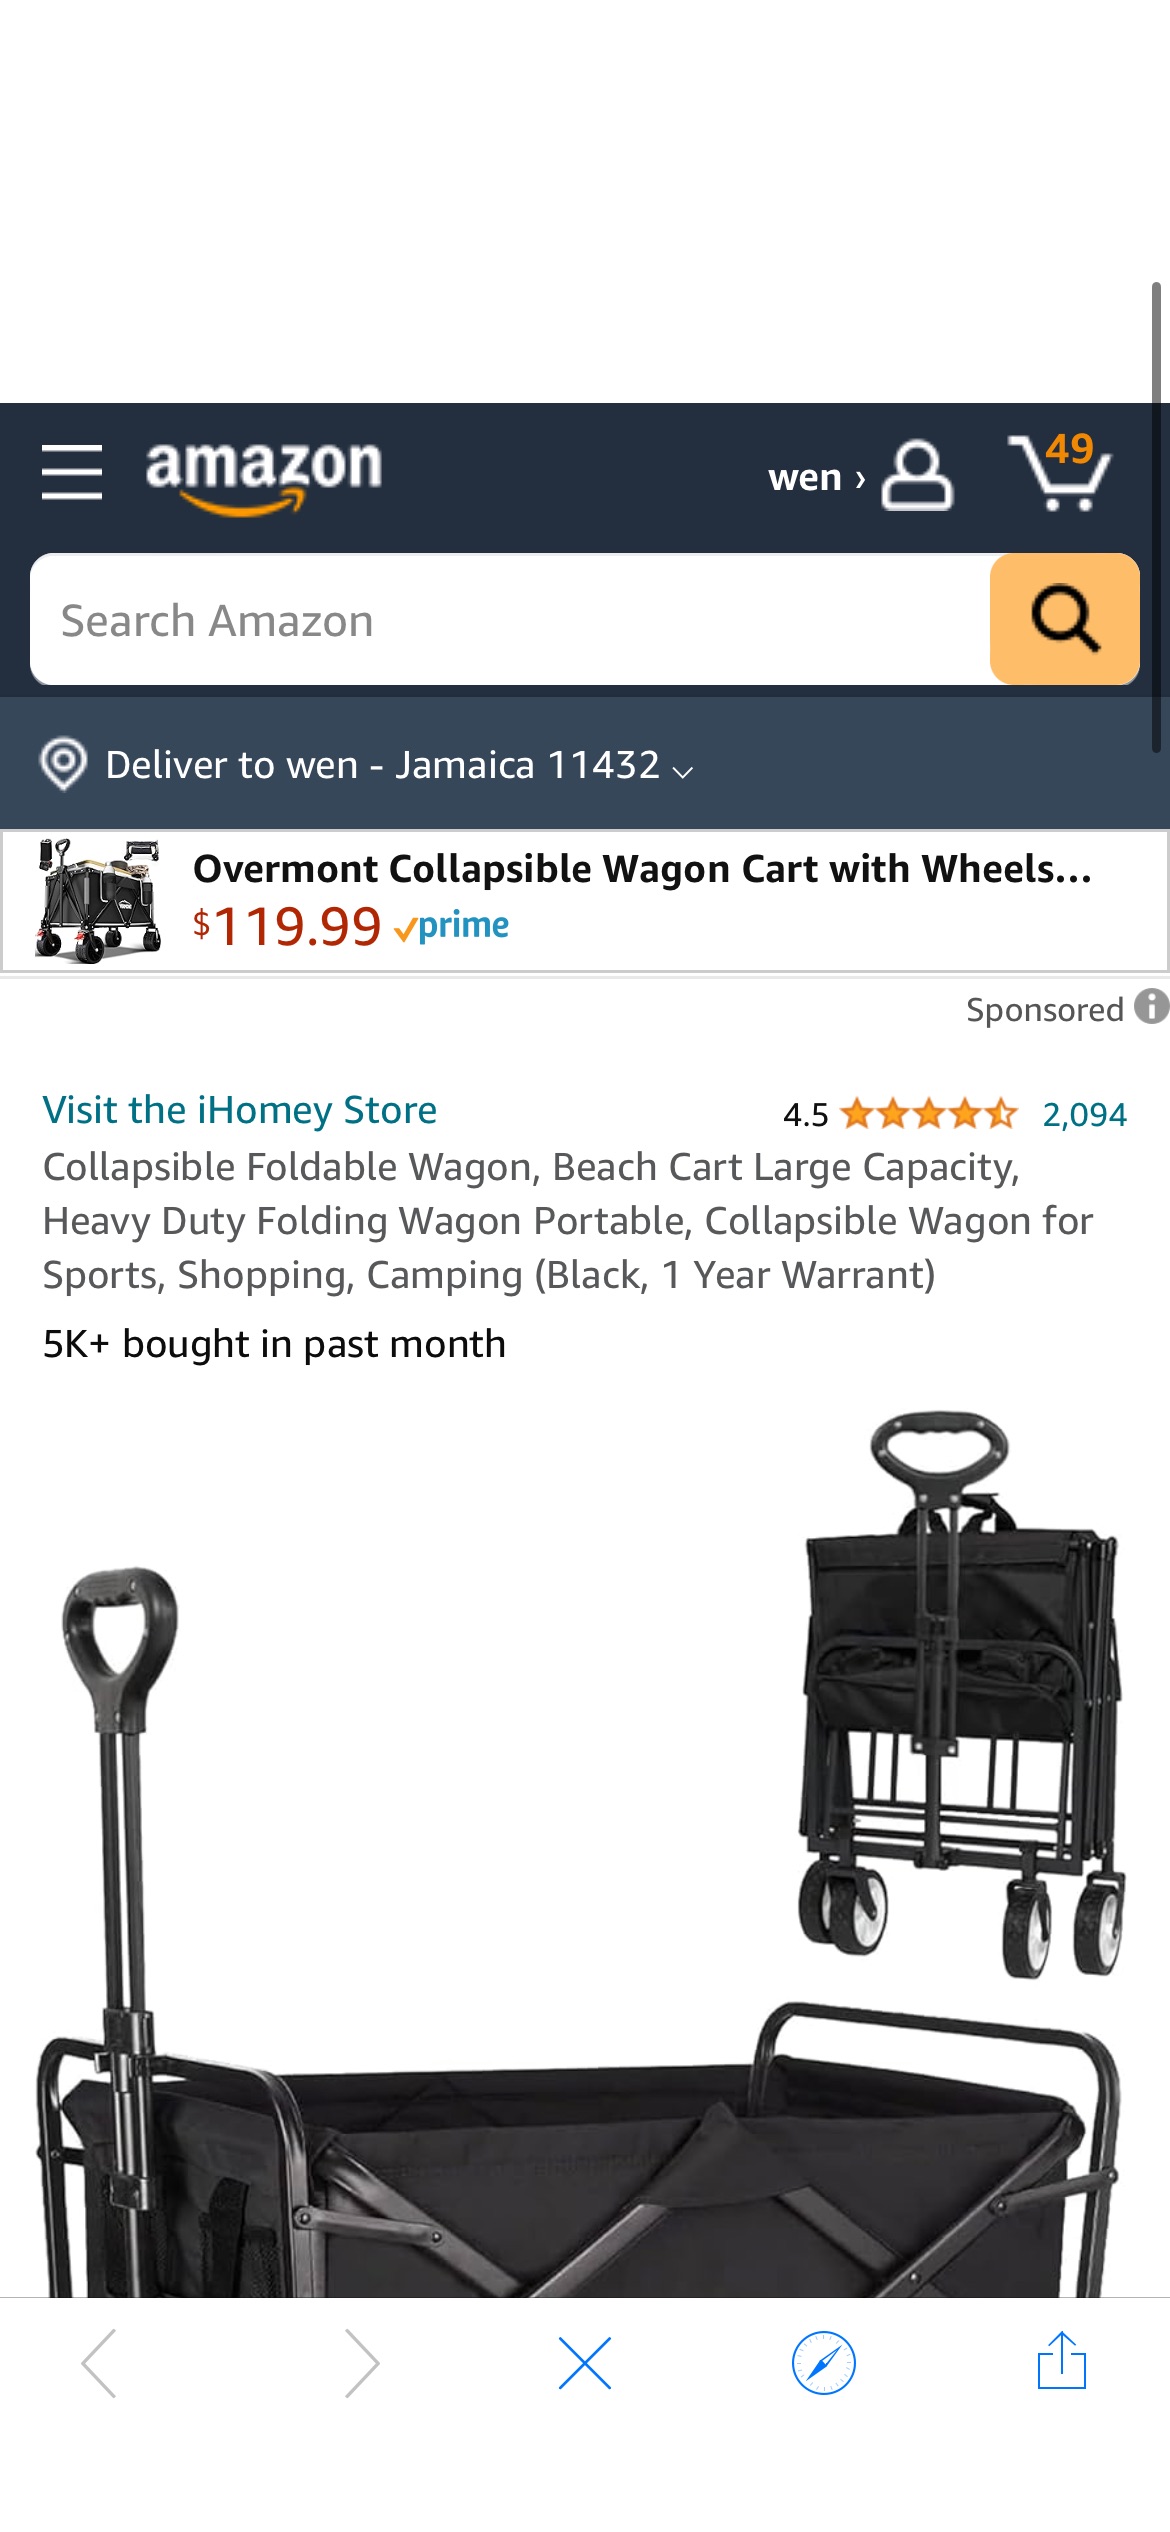 Amazon.com: Collapsible Foldable Wagon, Beach Cart Large Capacity, Heavy Duty Folding Wagon Portable, Collapsible Wagon for Sports, Shopping, Camping (Black, 1 Year Warrant) : Patio, Lawn & Garden